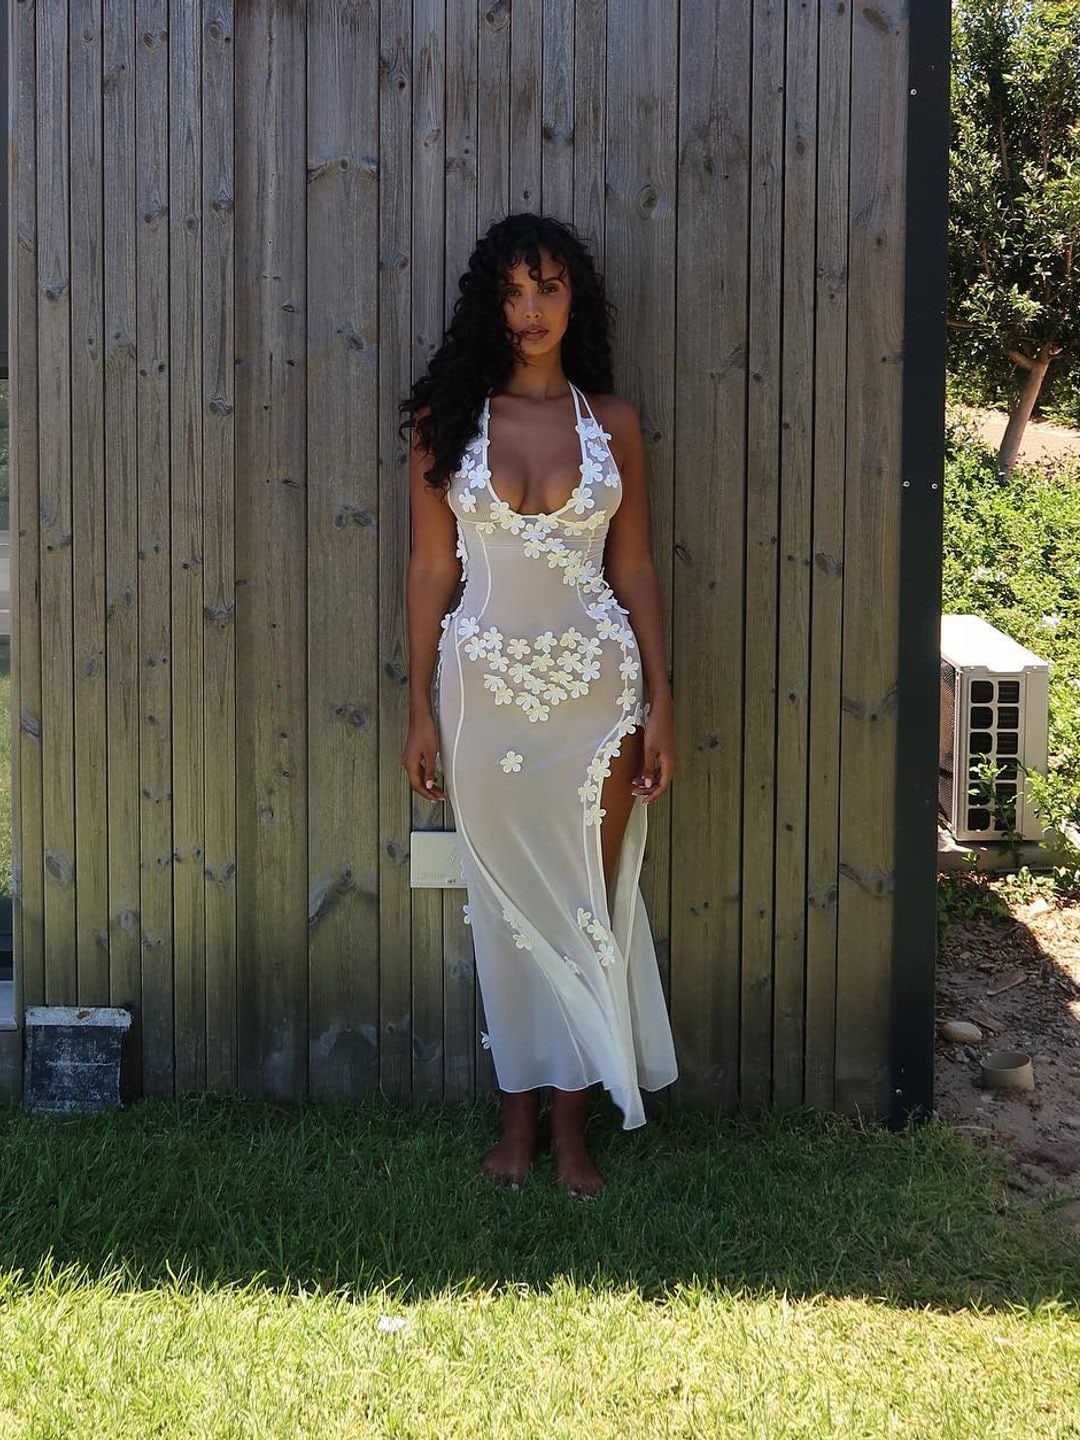 Maya Jama Poses infront of a wood house wearing a sheer white dress